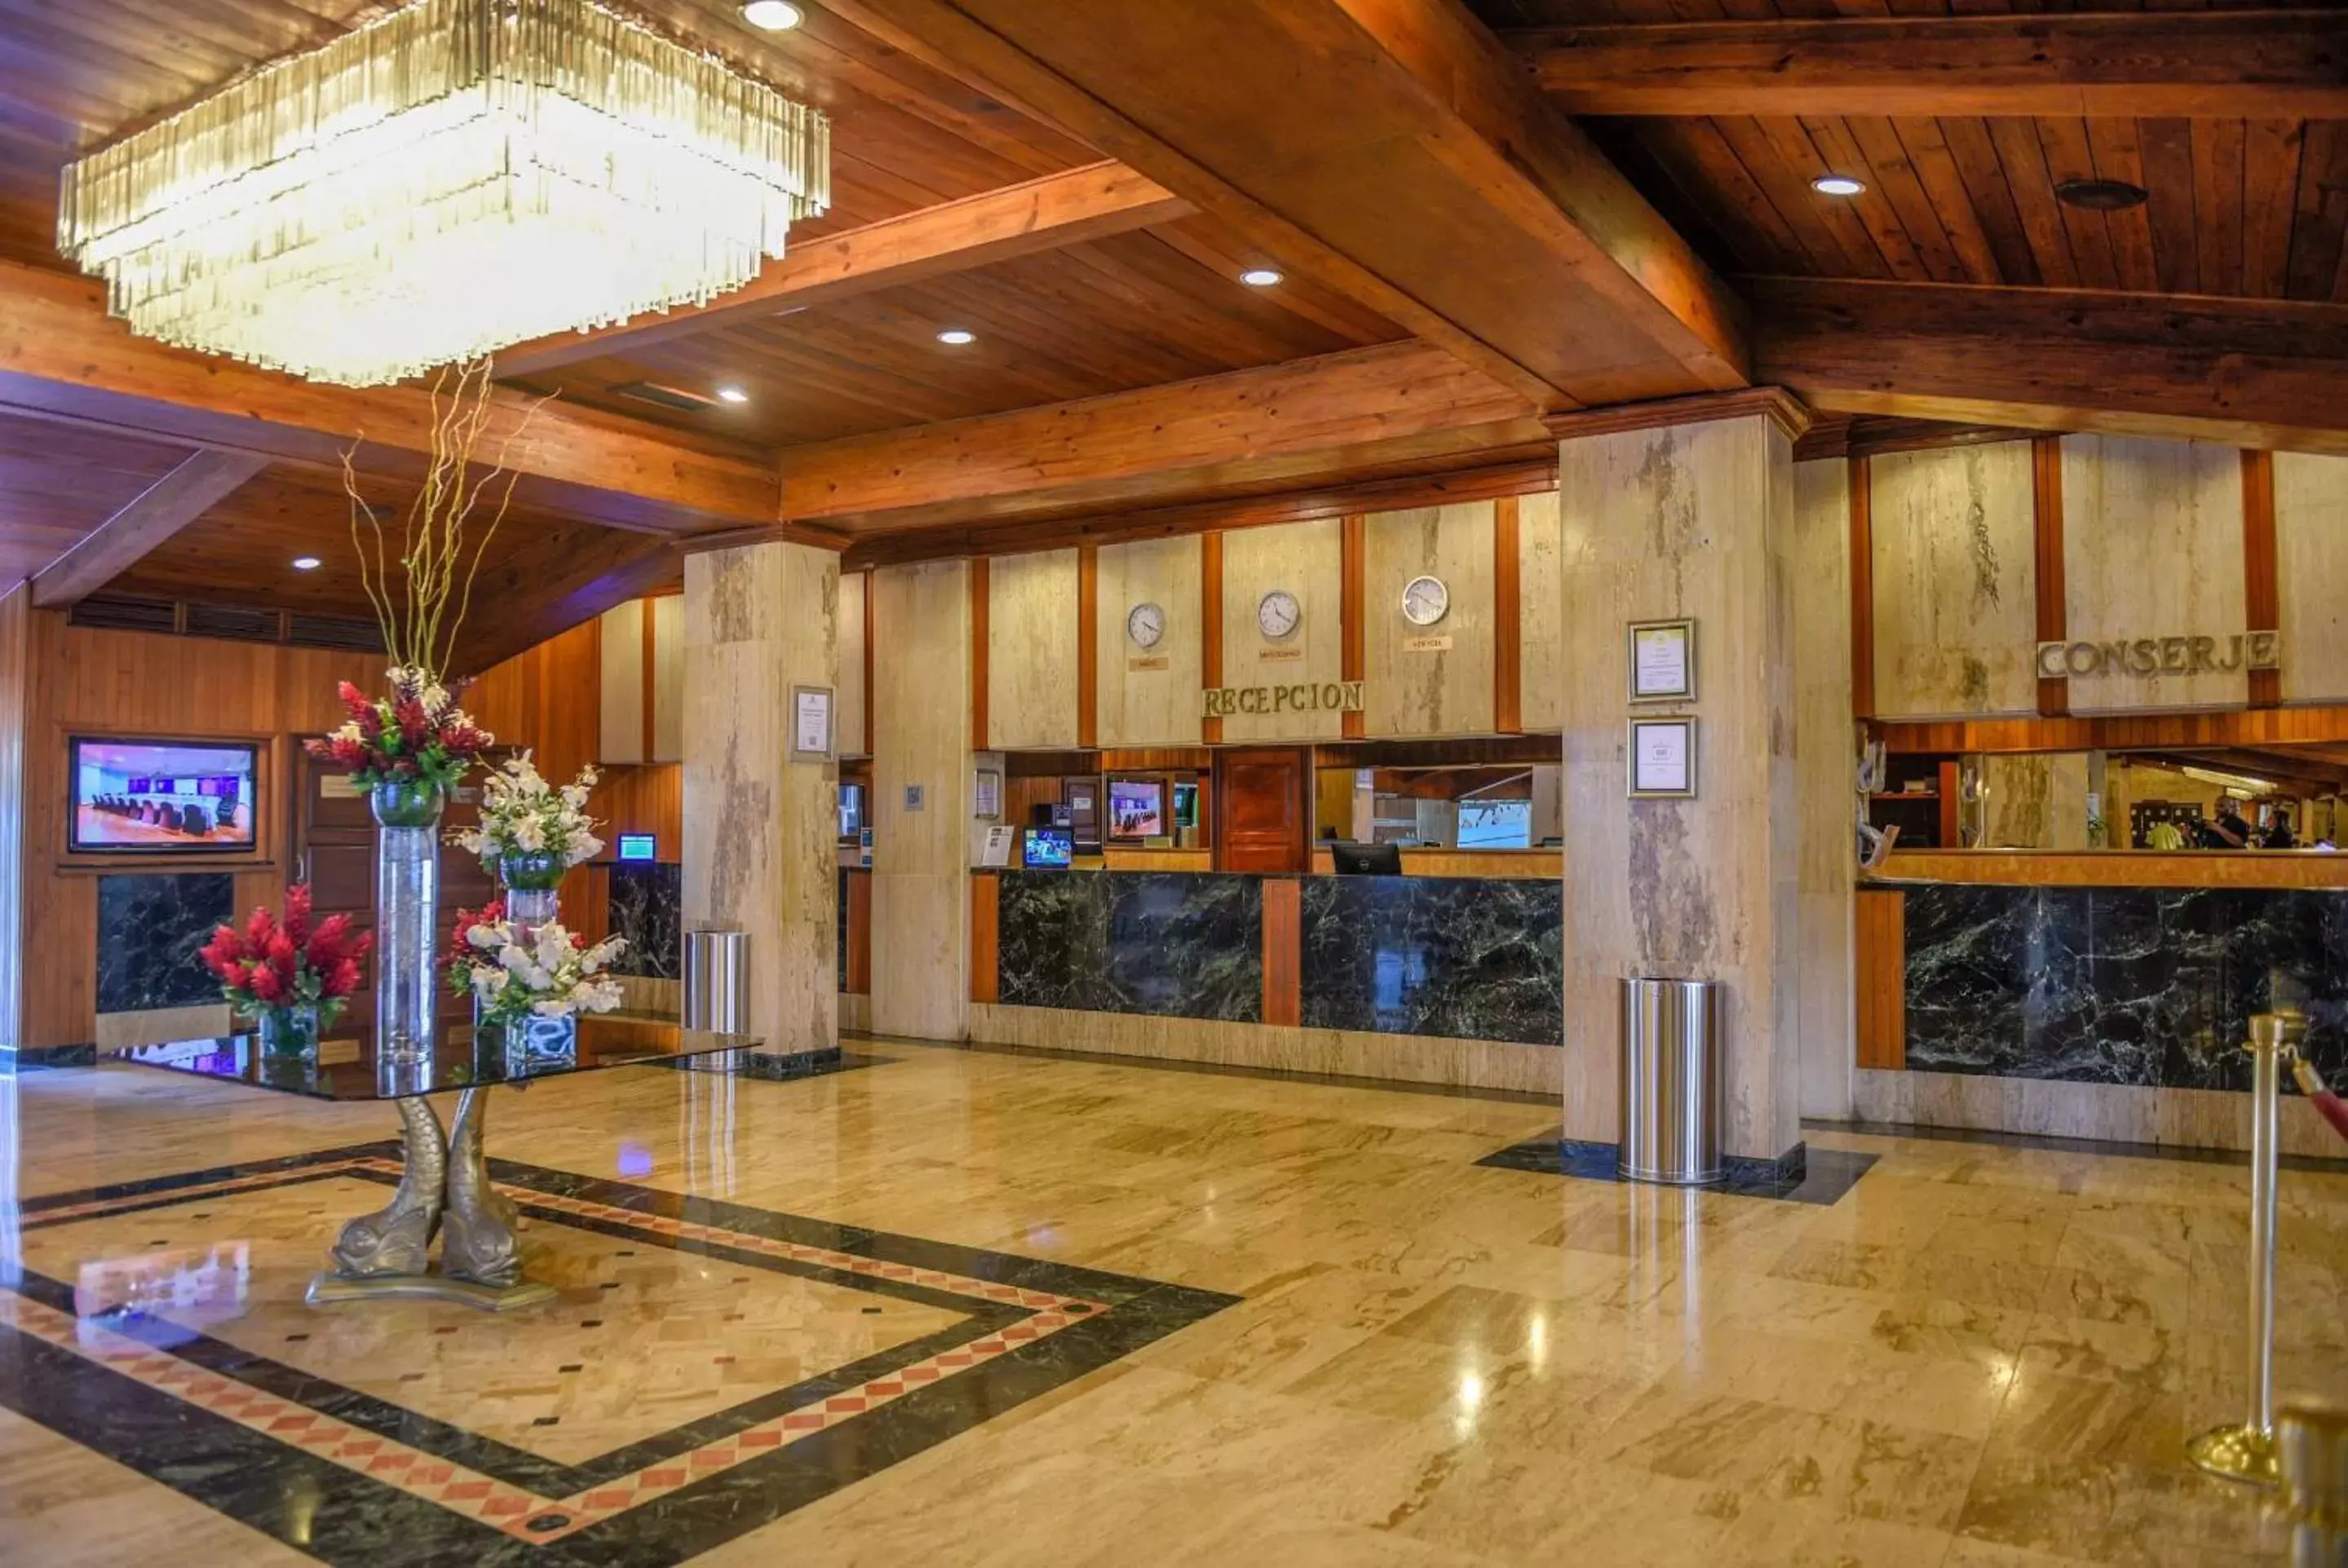 Lobby or reception, Lobby/Reception in Dominican Fiesta Hotel & Casino